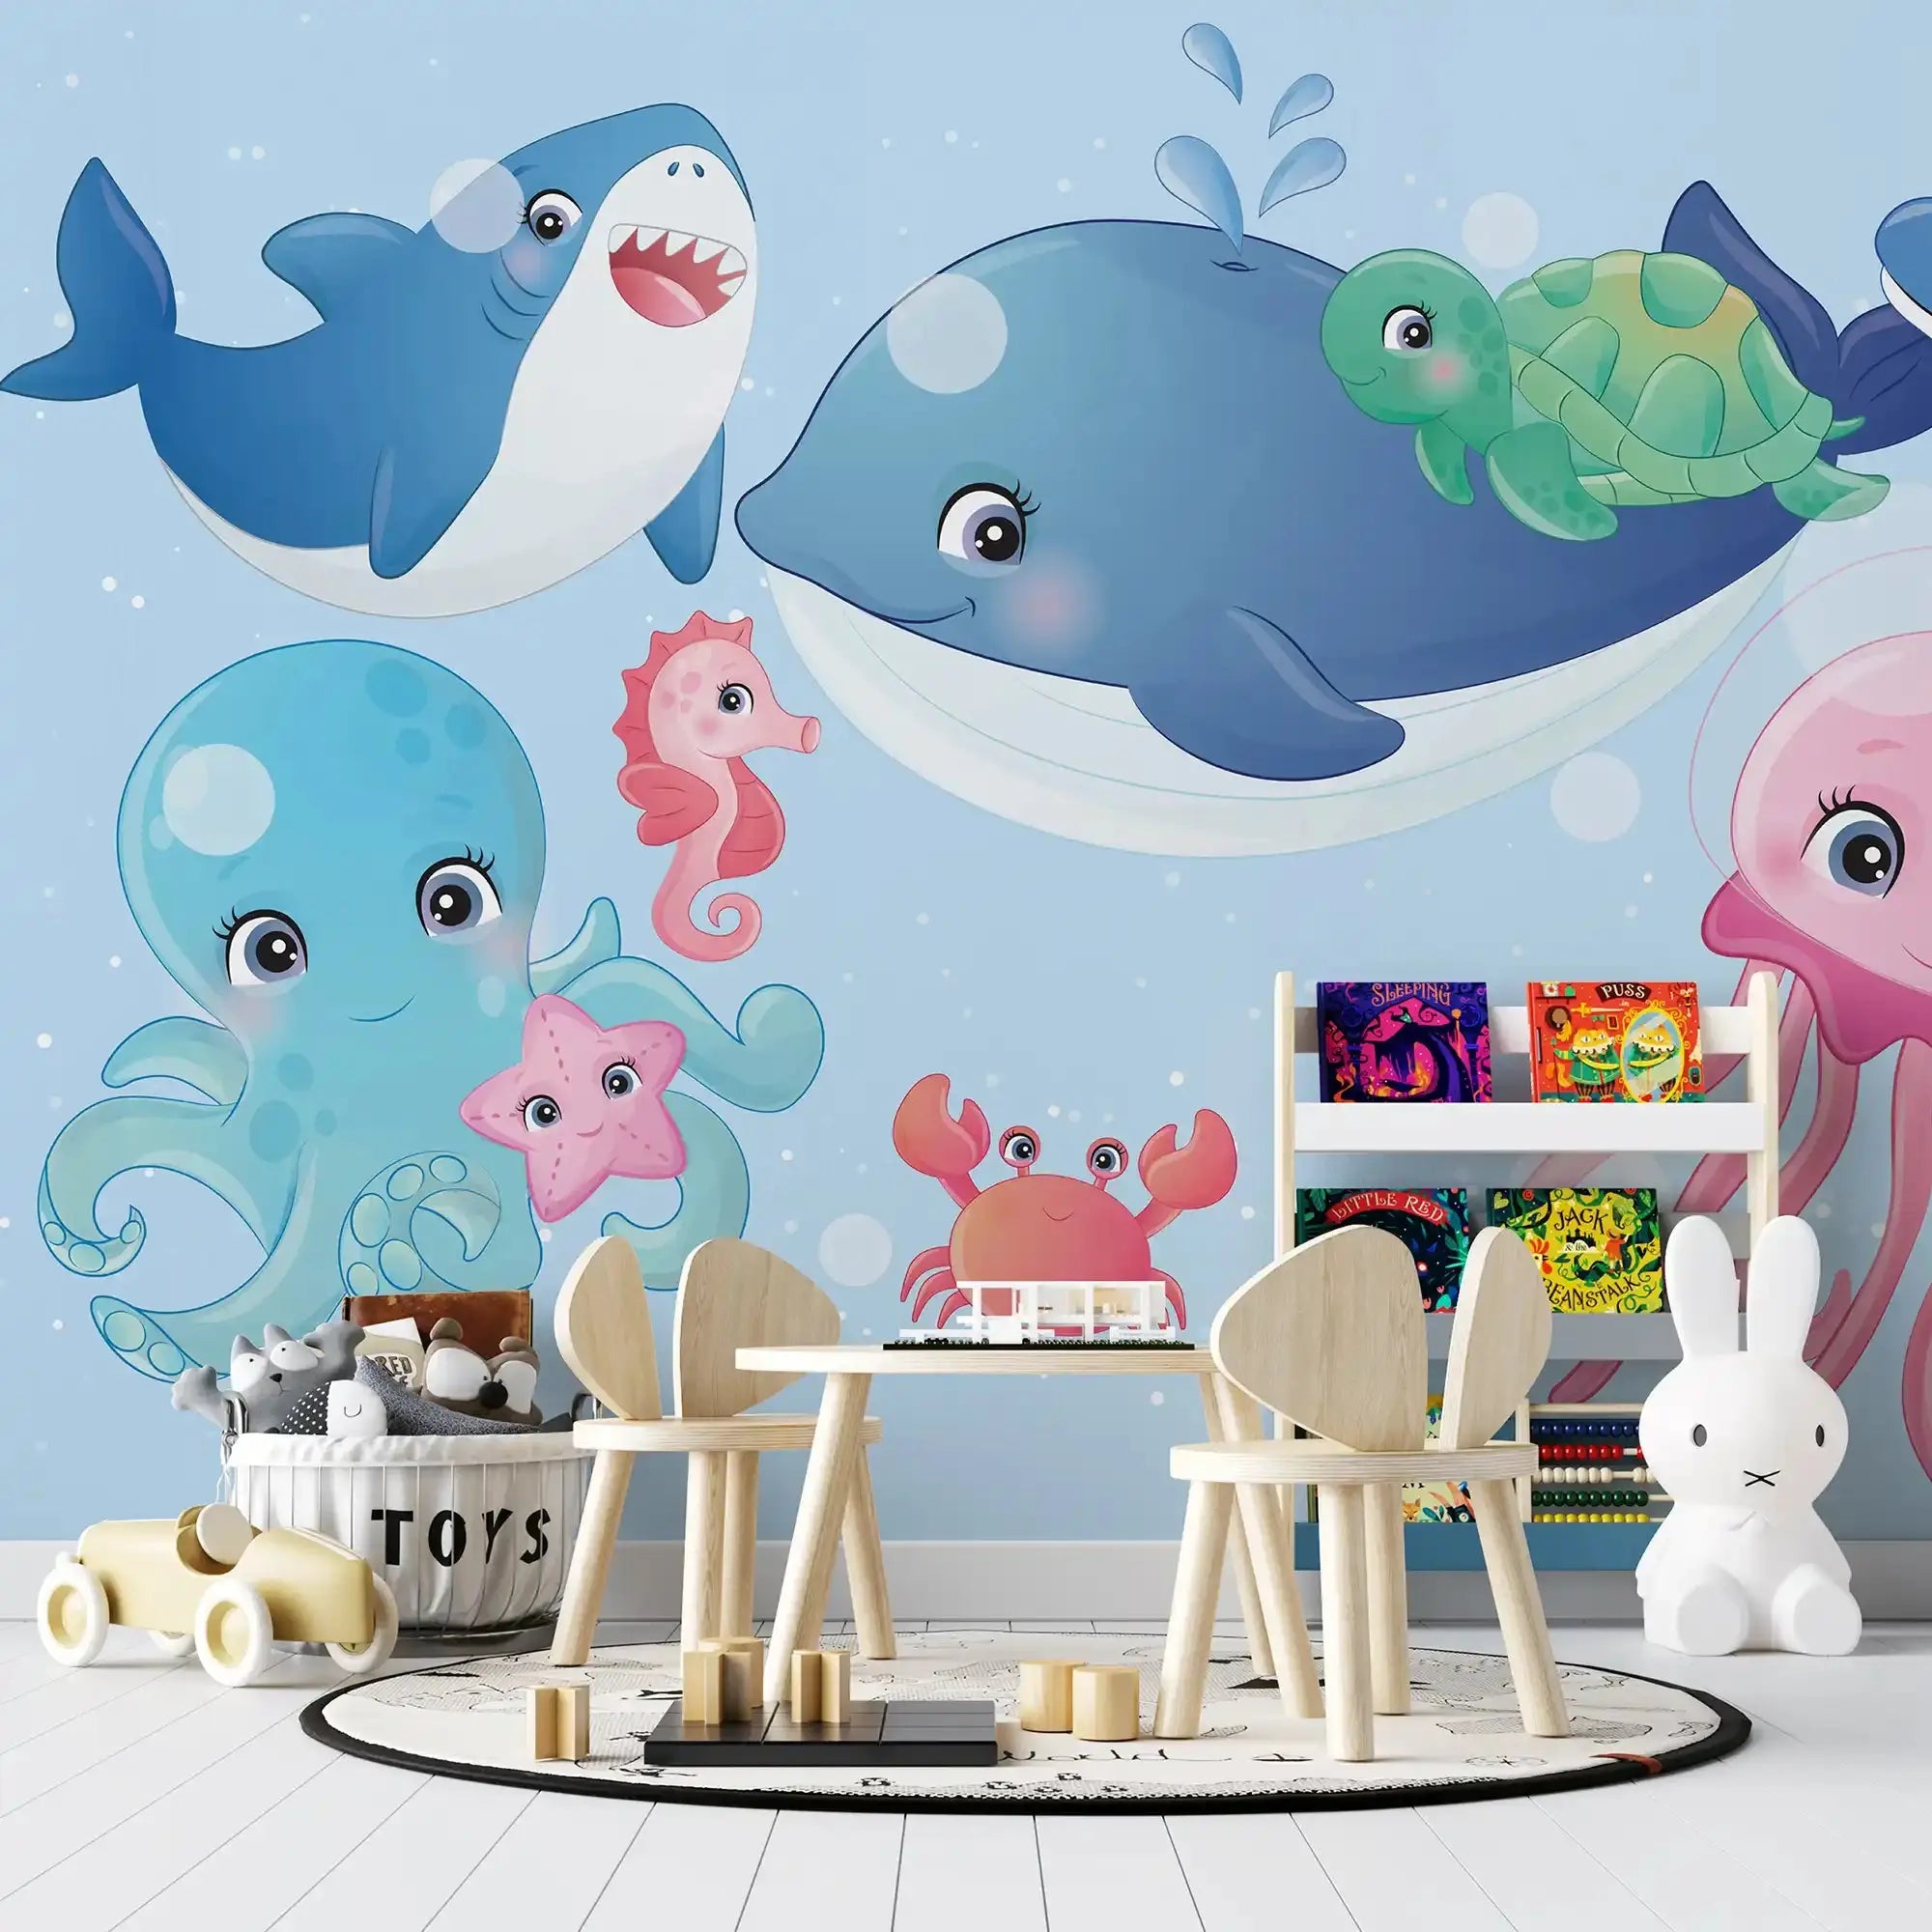 6018 / Nursery Room Peel and Stick Wallpaper: Fun, Removable Under the Sea Animals Mural for Kids Bedroom Decor - Artevella